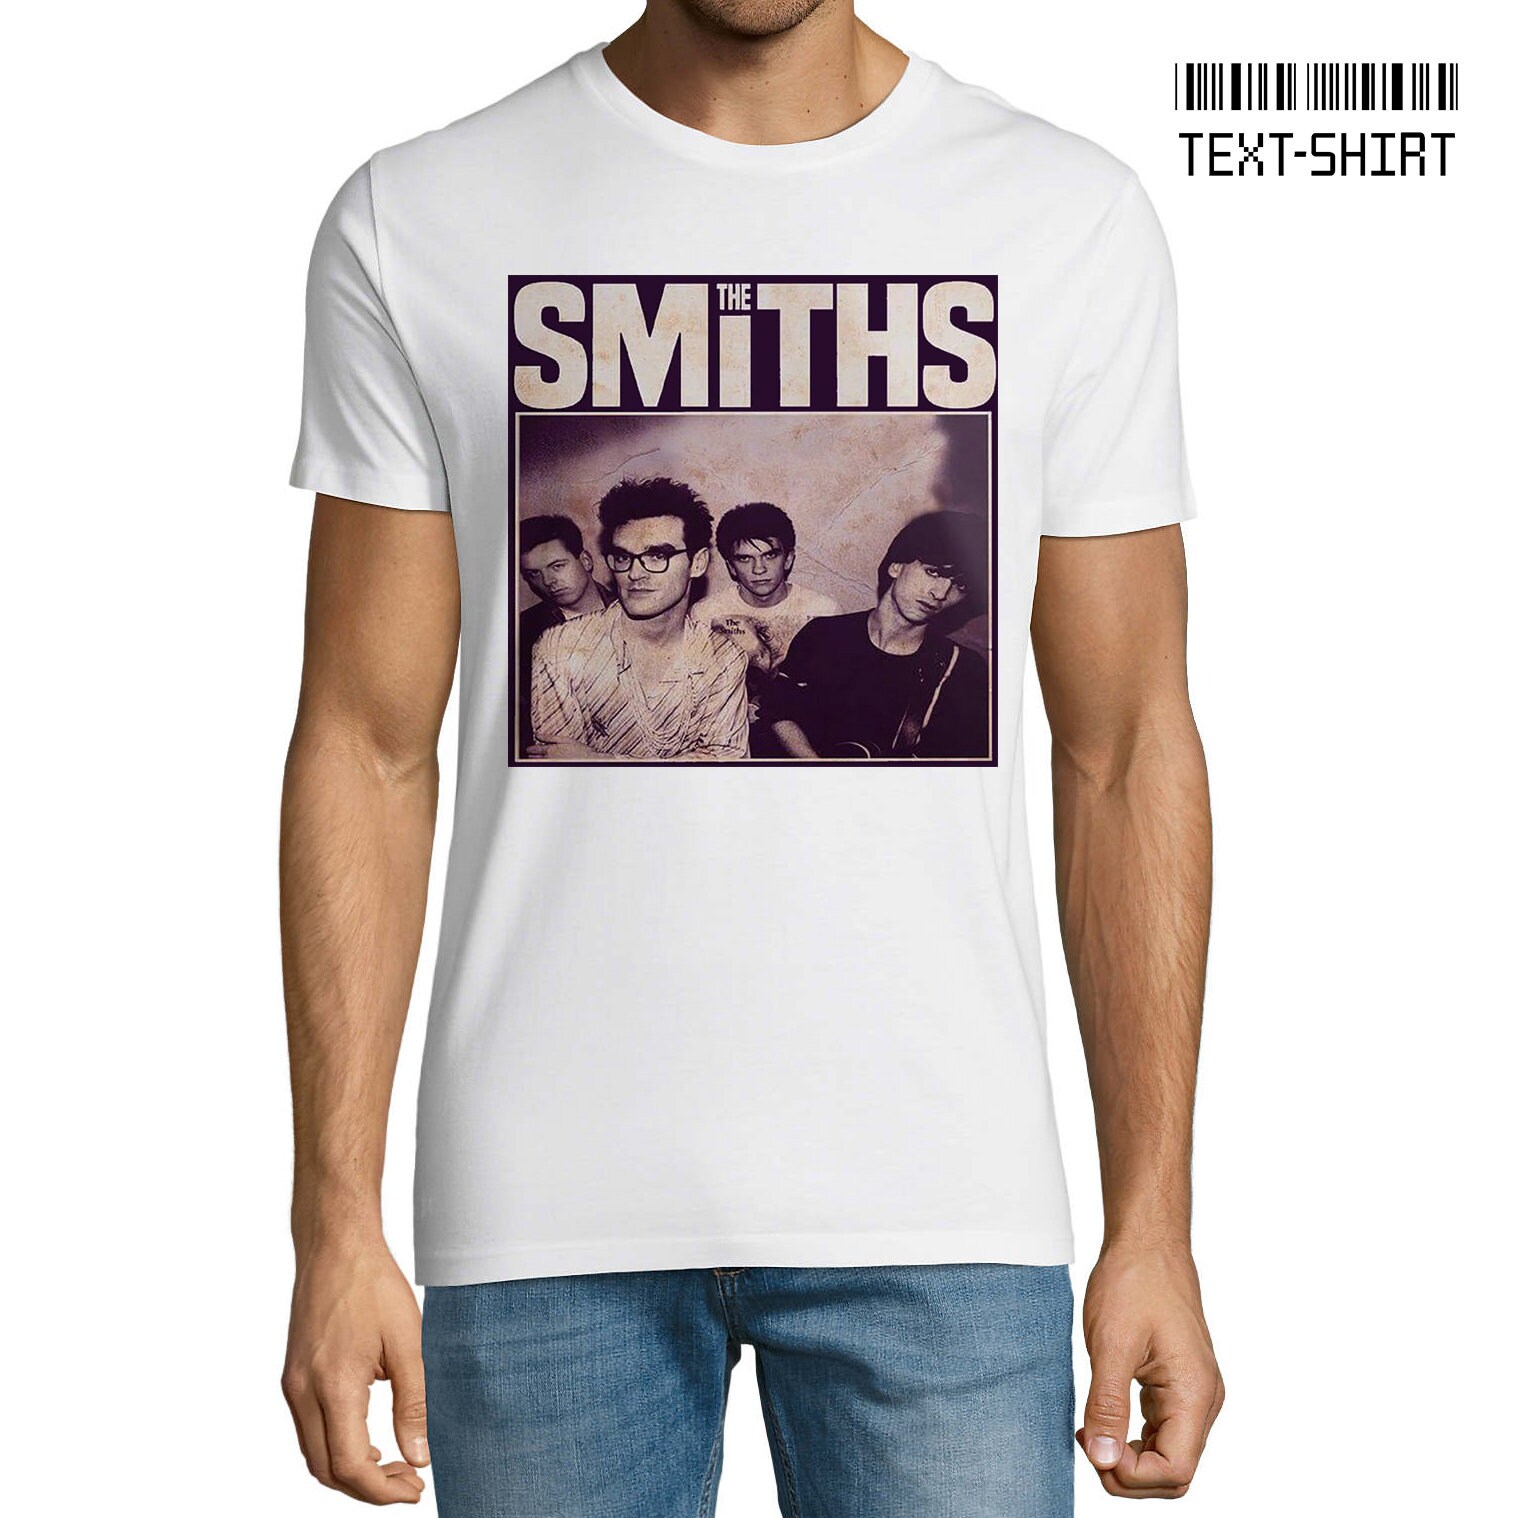 Hælde rille Traktat The Smiths T-shirt for Women and Men / Morrissey Alternative - Etsy